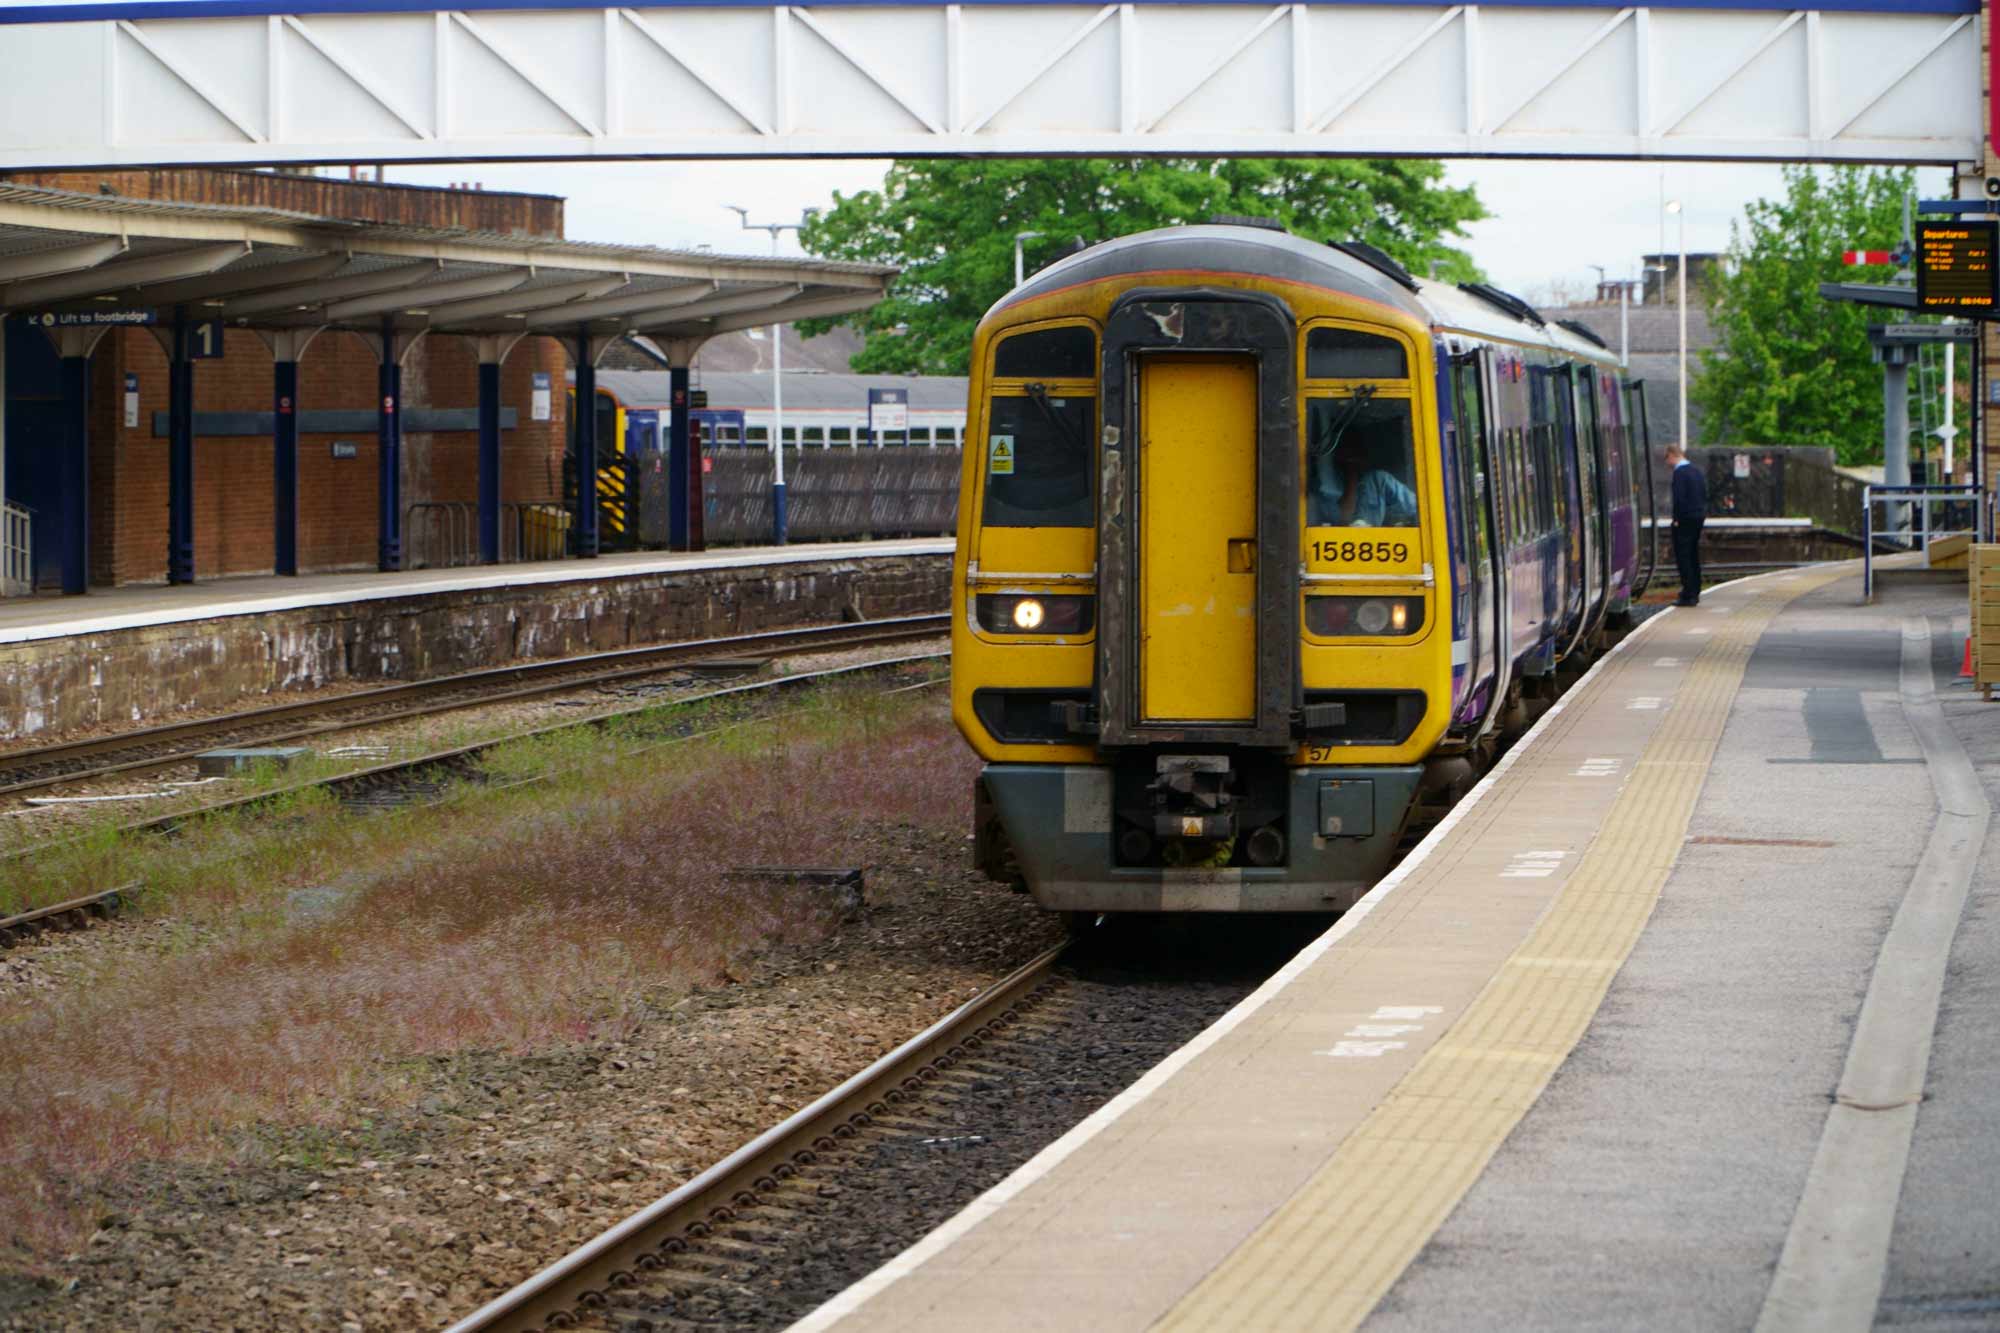 Harrogate Railway Station